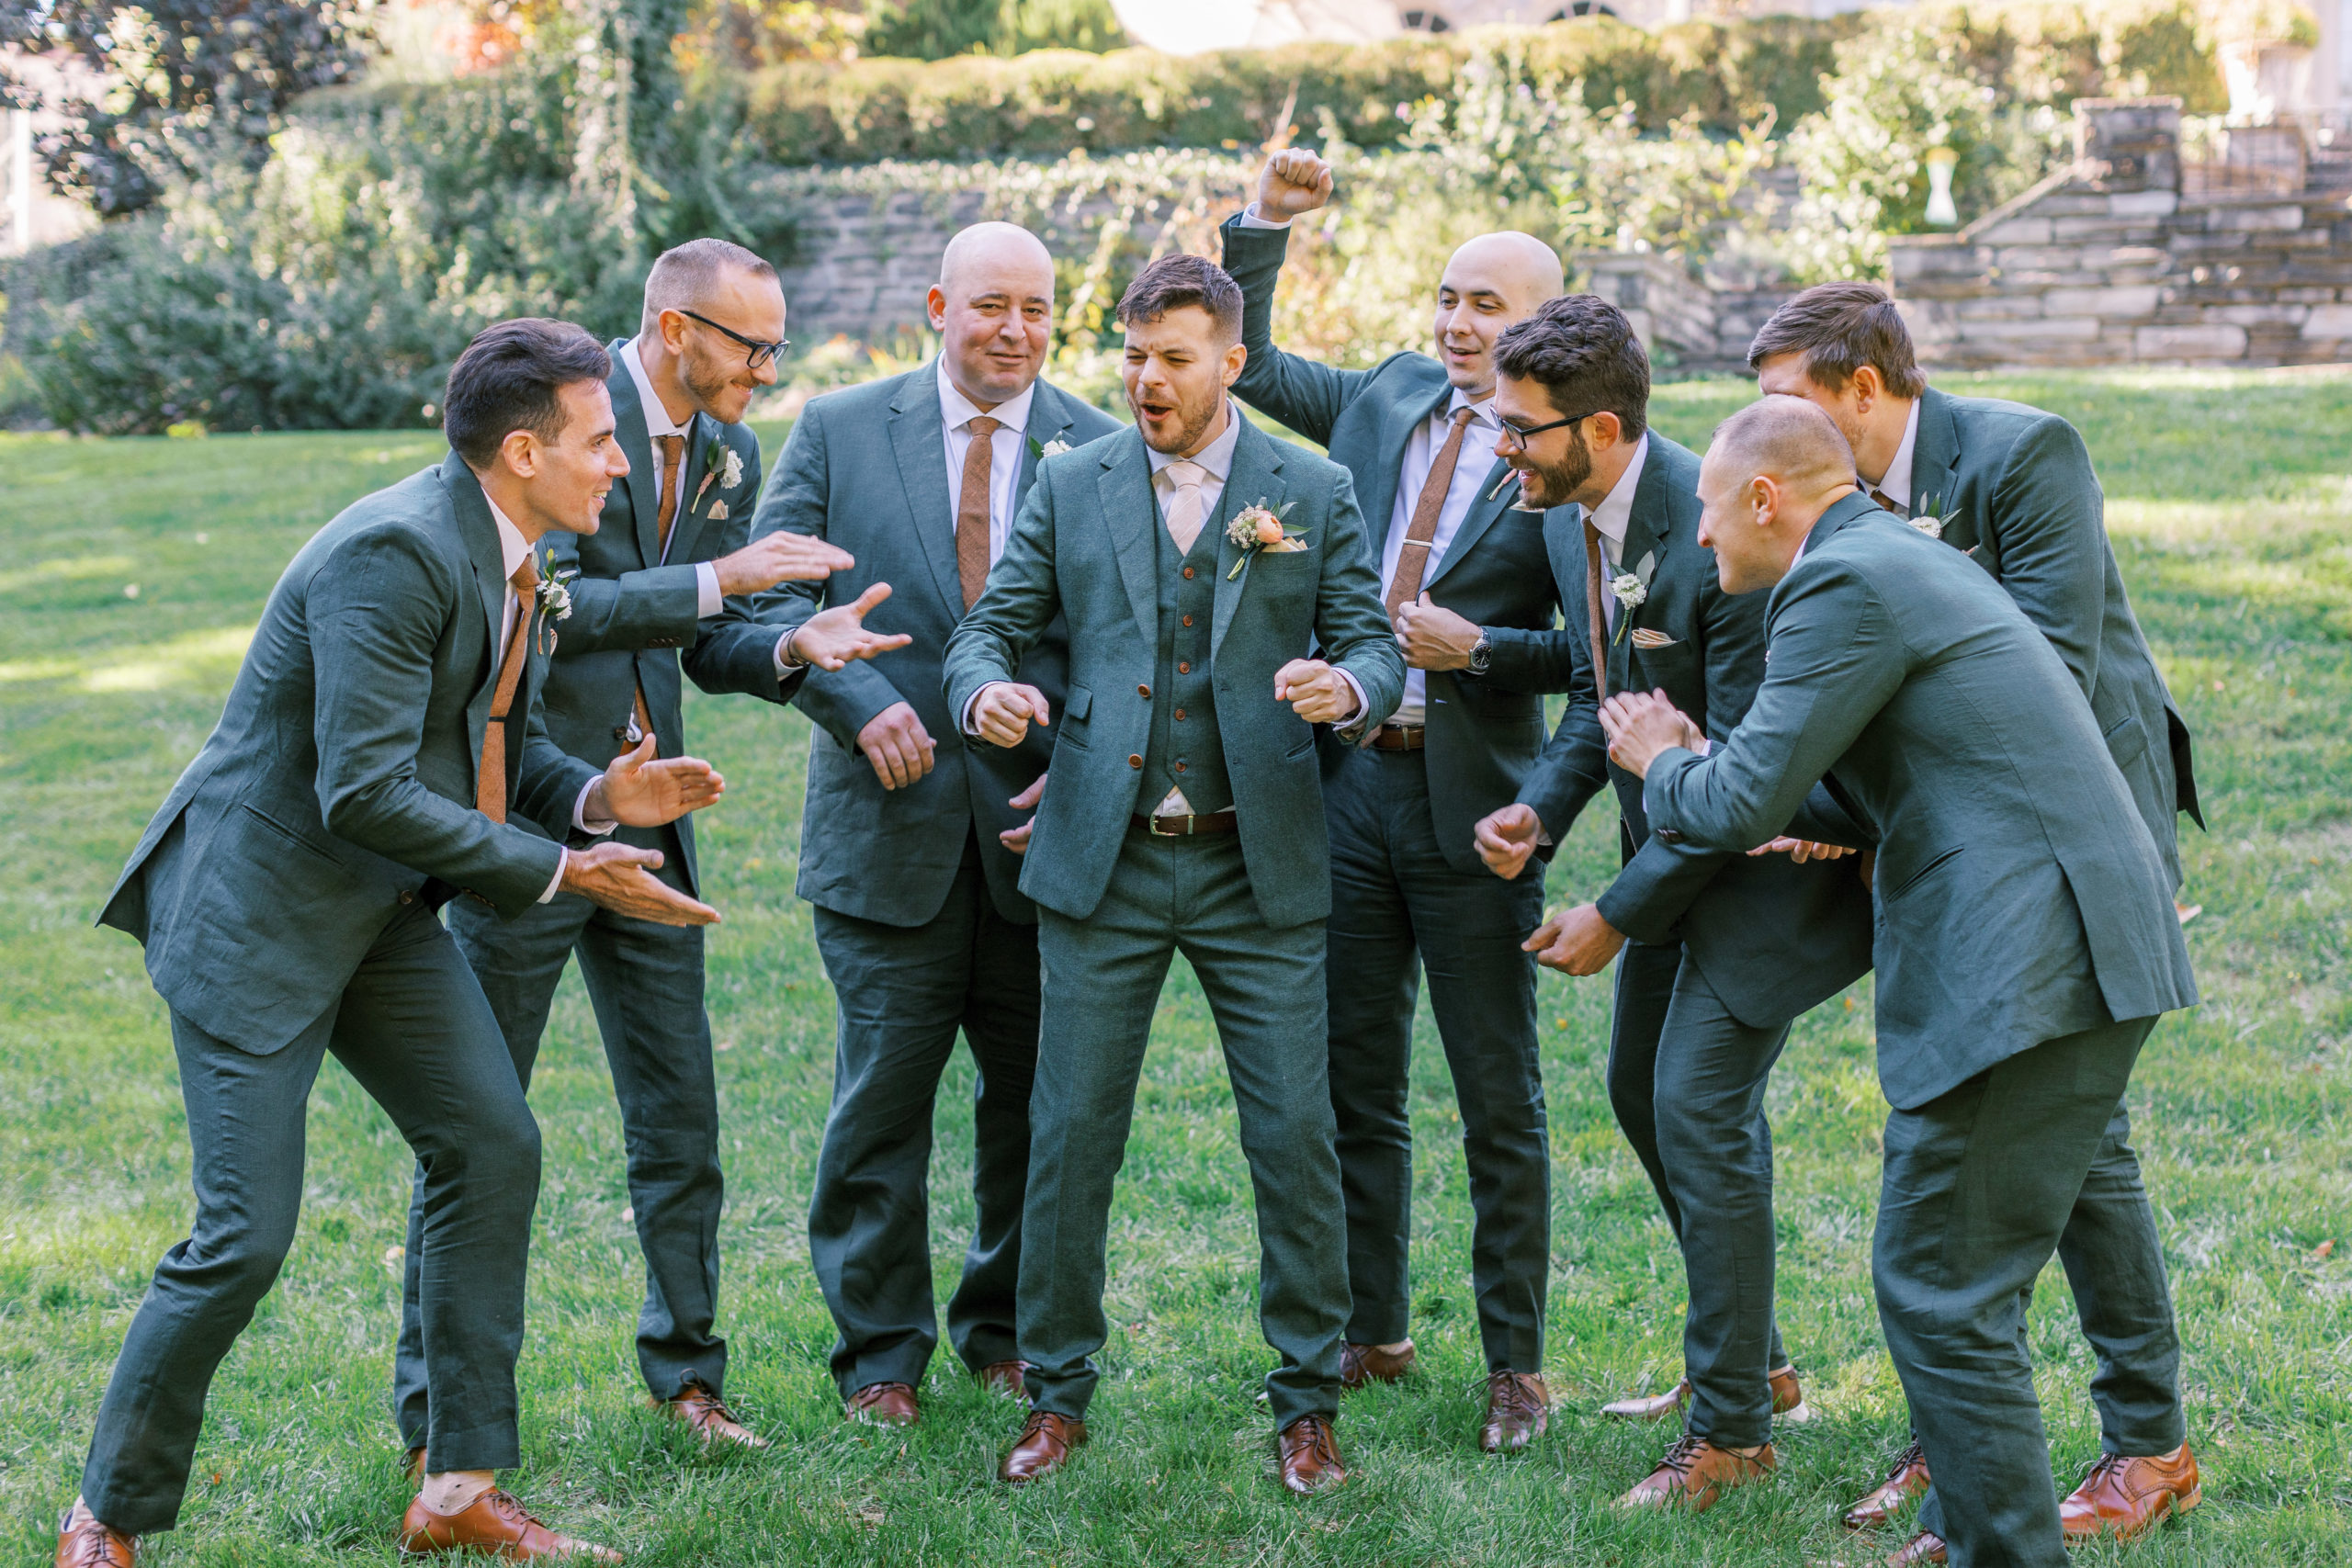 Groomsmen hype groom up on lawn before wedding for philadelphia wedding photographer